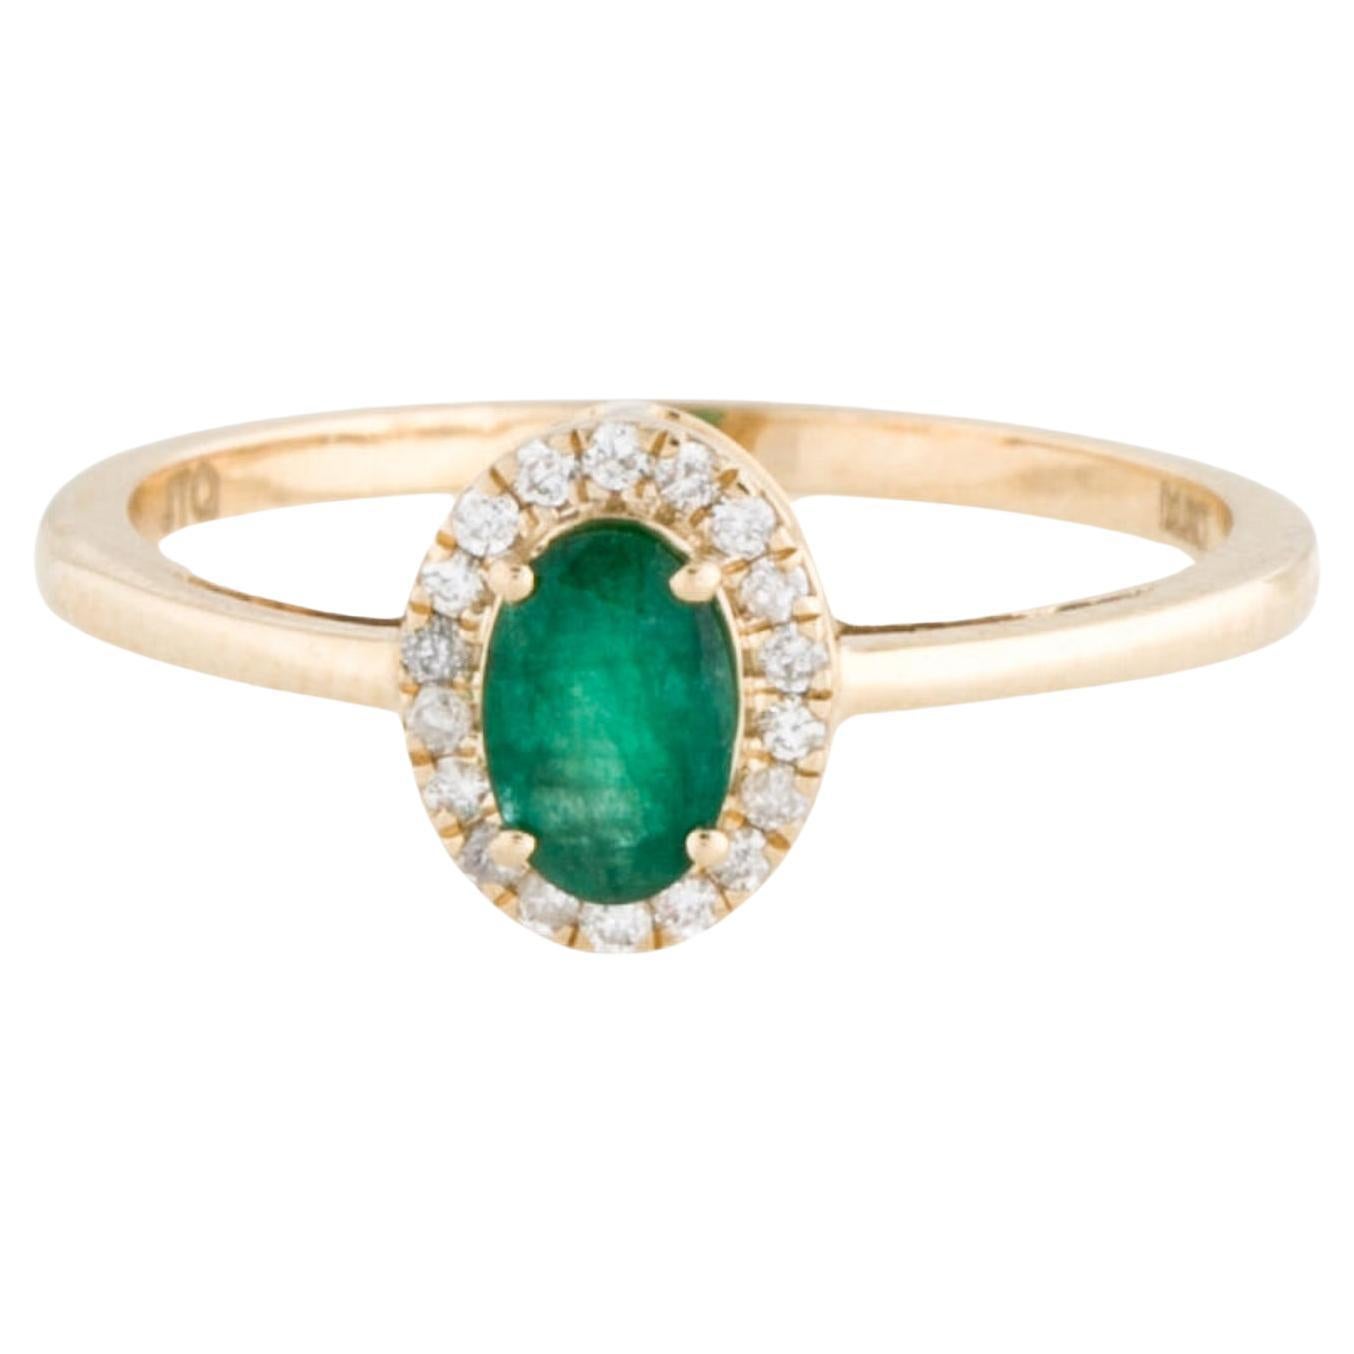 Stunning 14K Emerald & Diamond Halo Ring, Size 7 - Statement Jewelry Piece For Sale